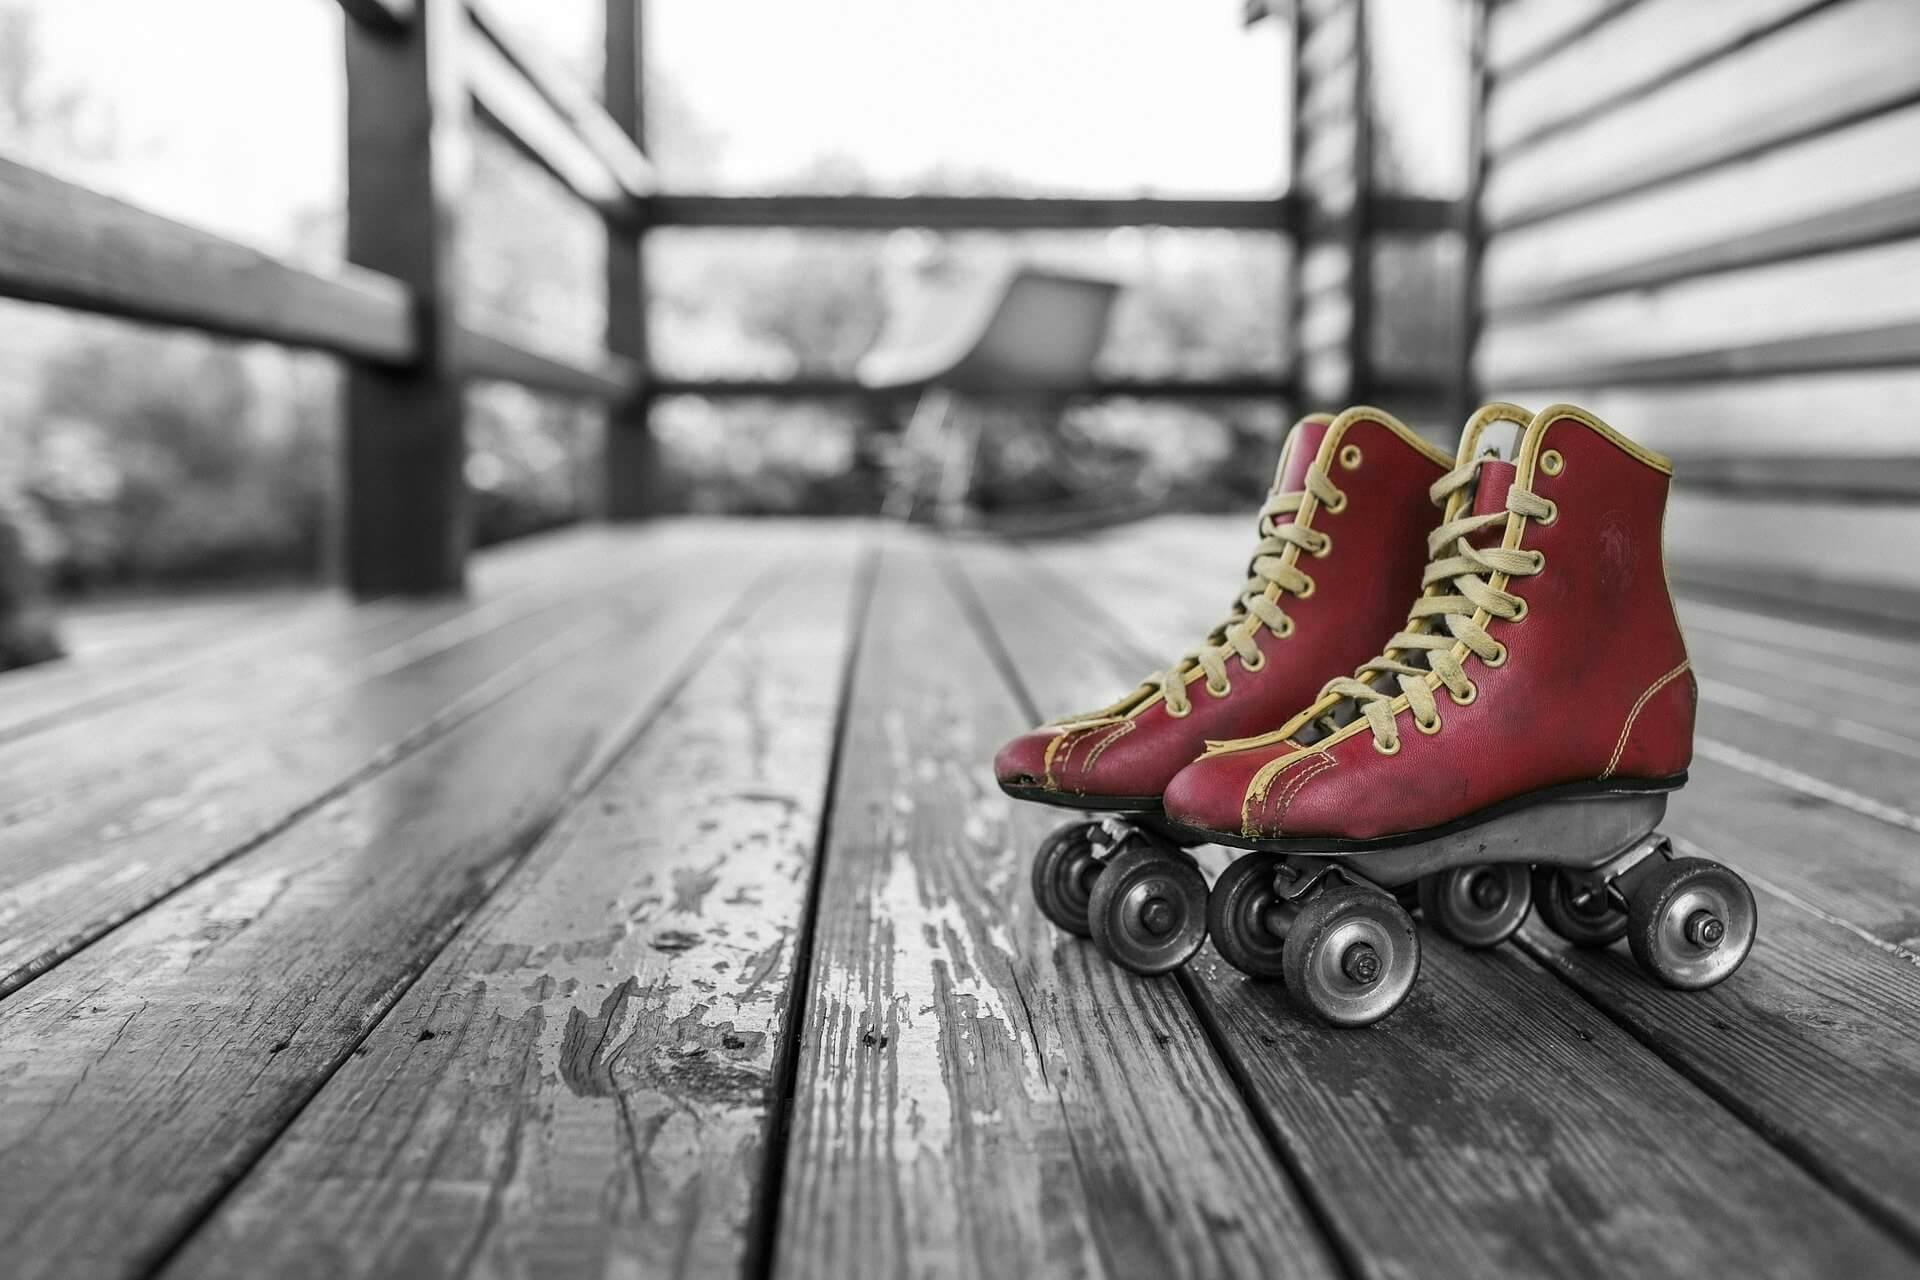 red roller skates